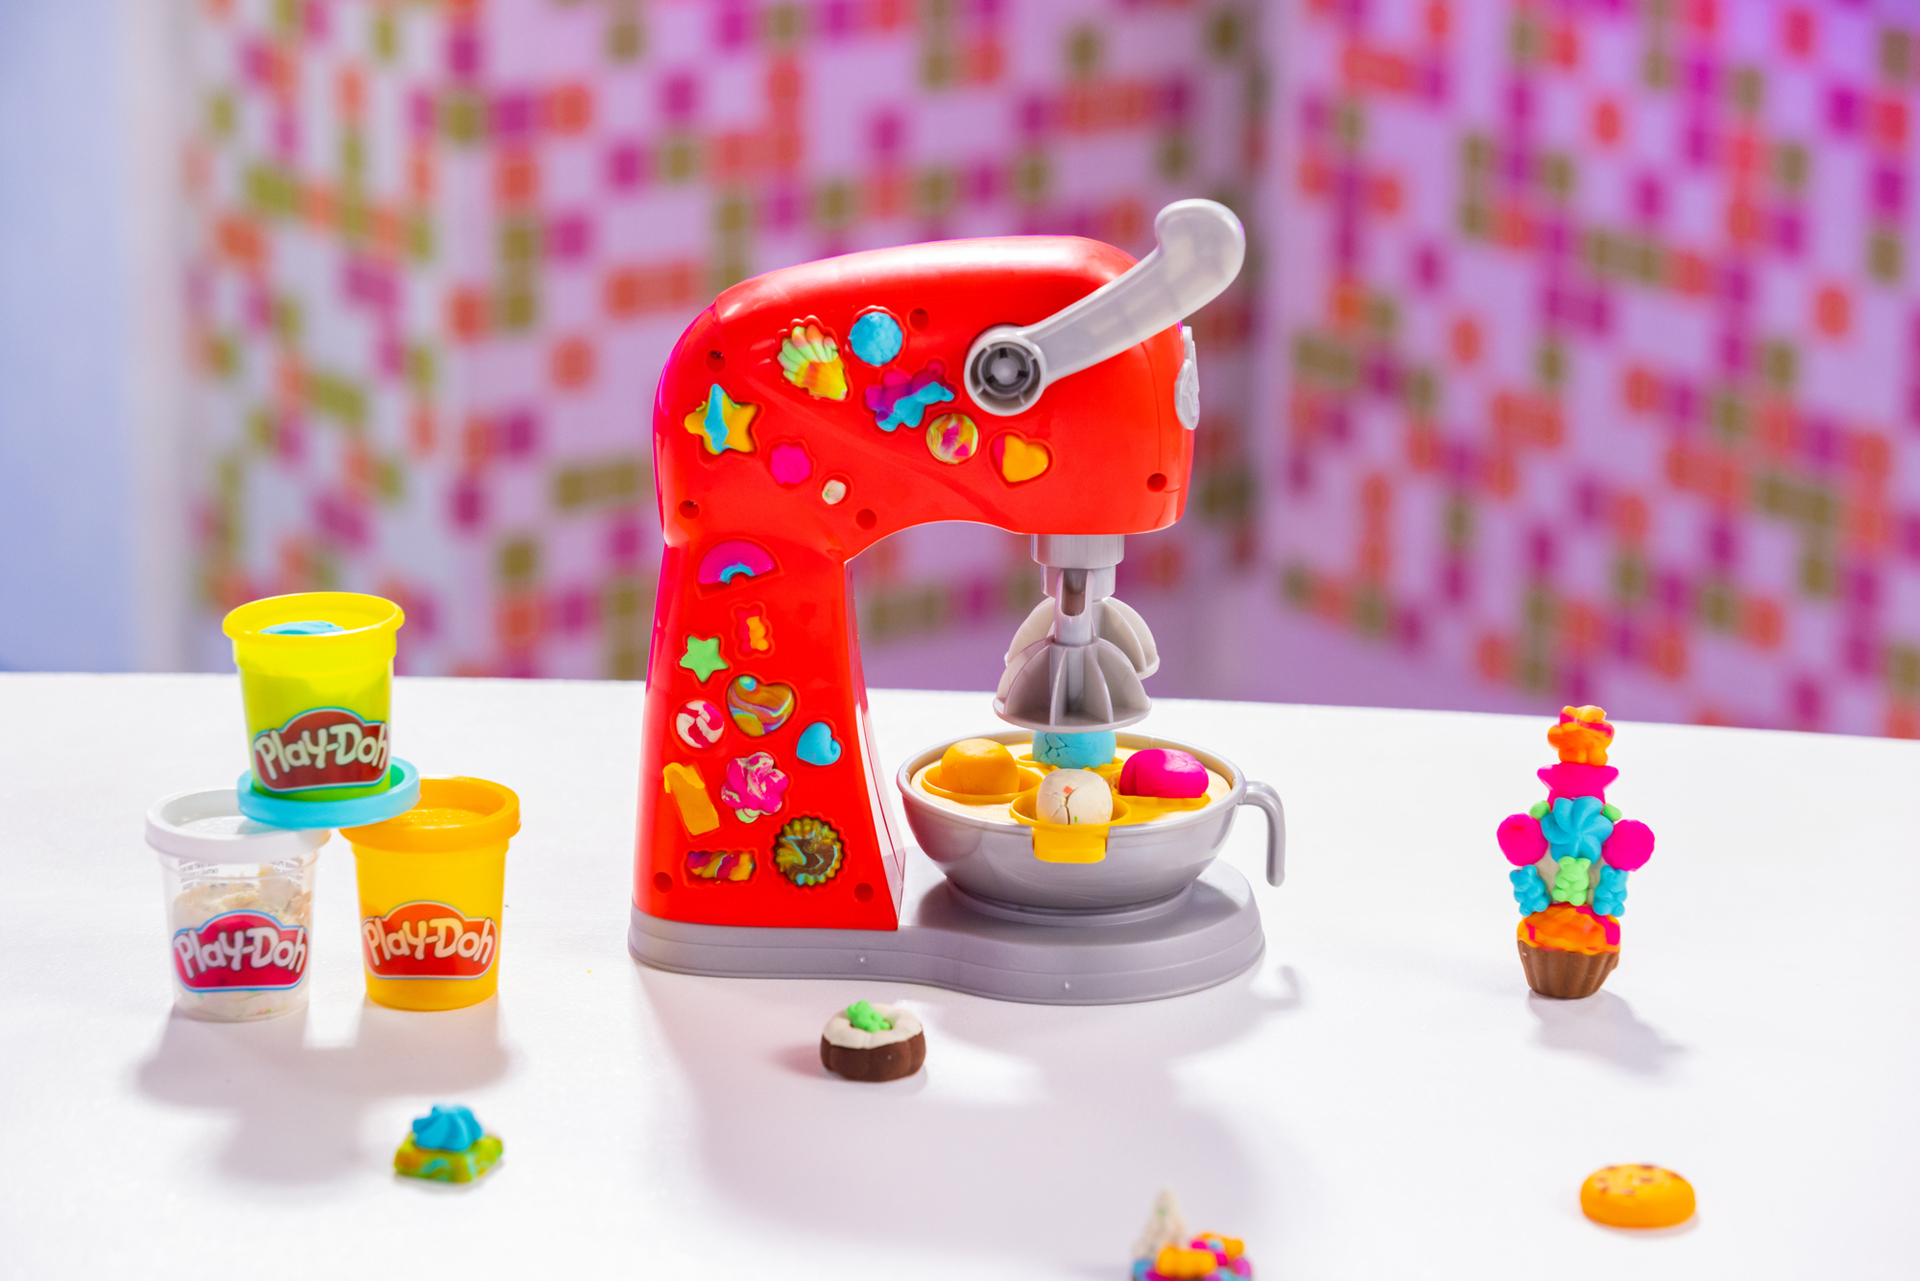 Play-Doh Magical Mixer Playset, Hobby Lobby